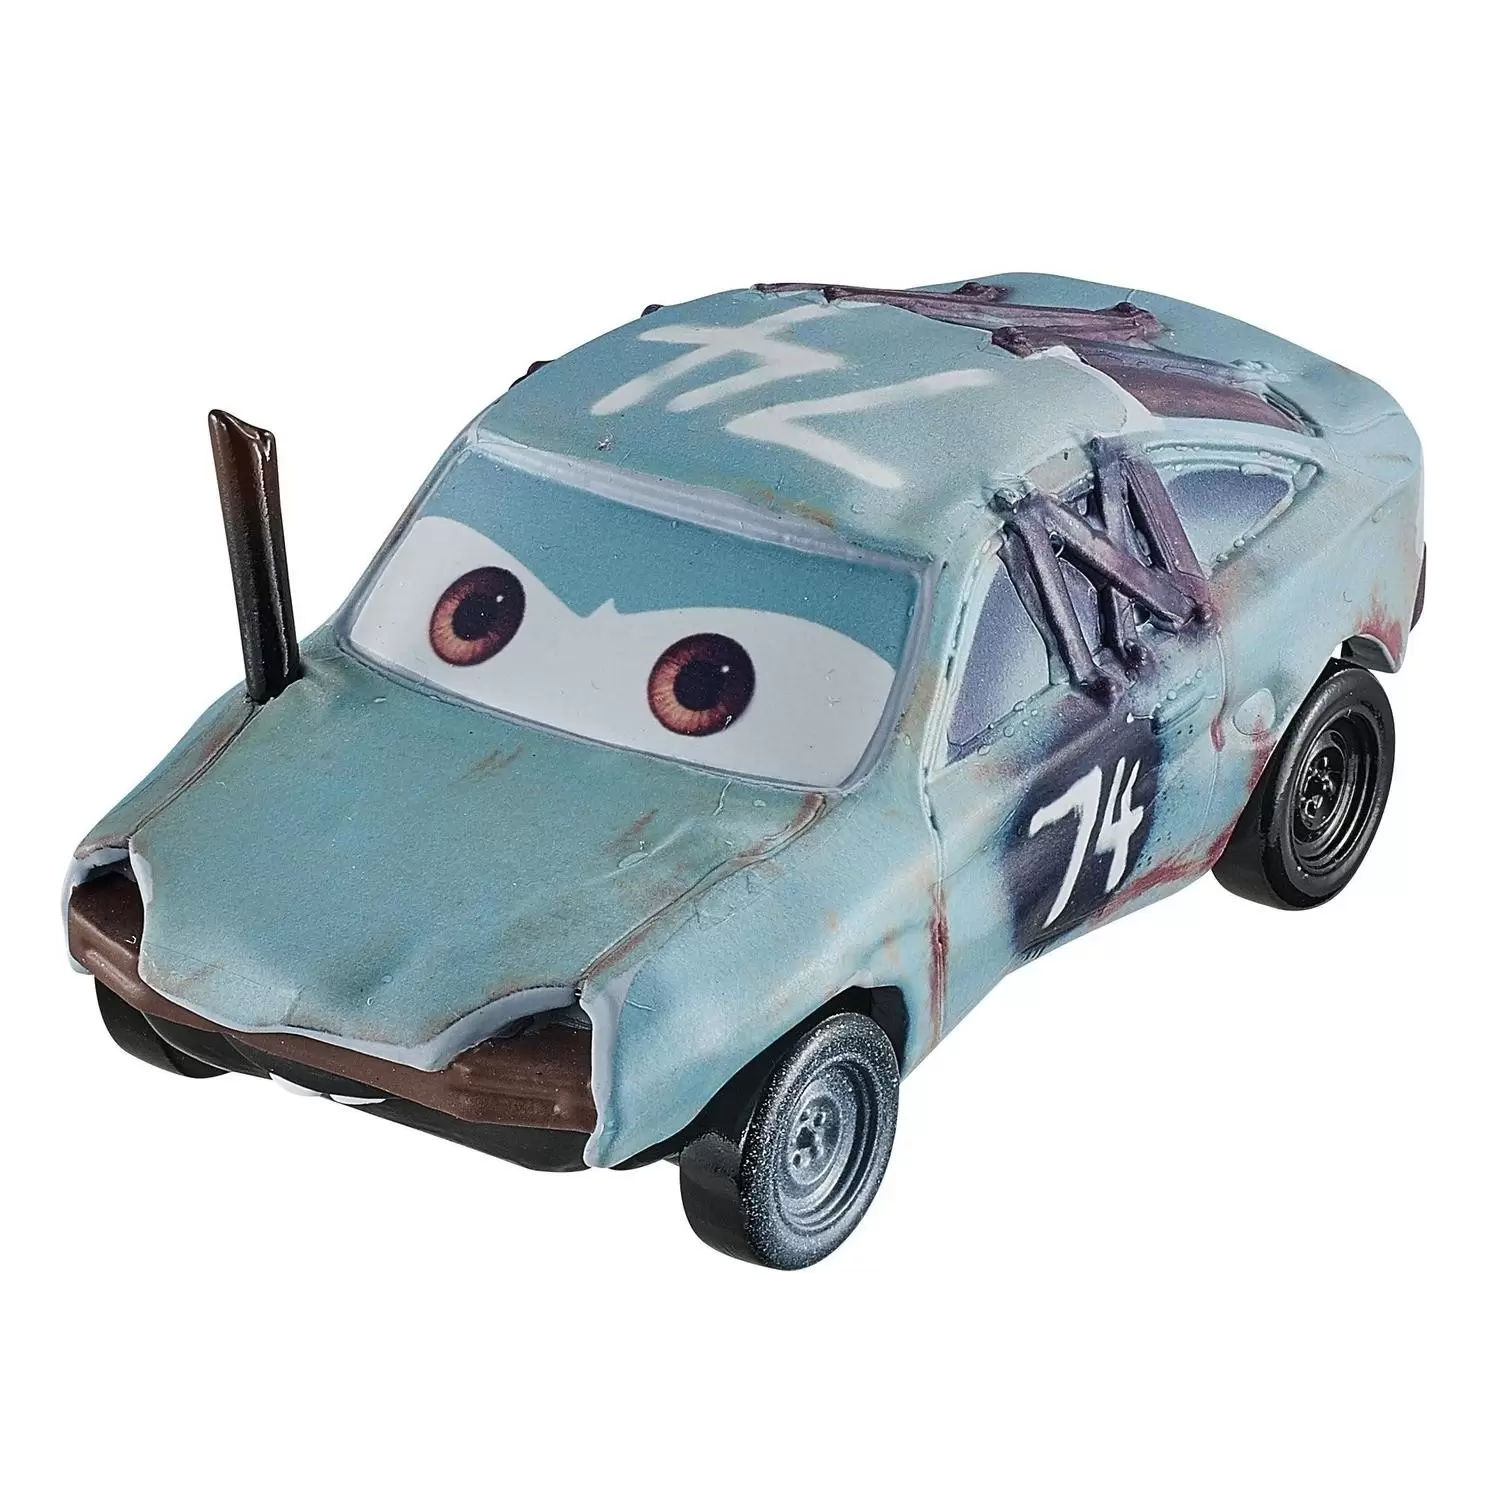 Cars 3 models - Patty